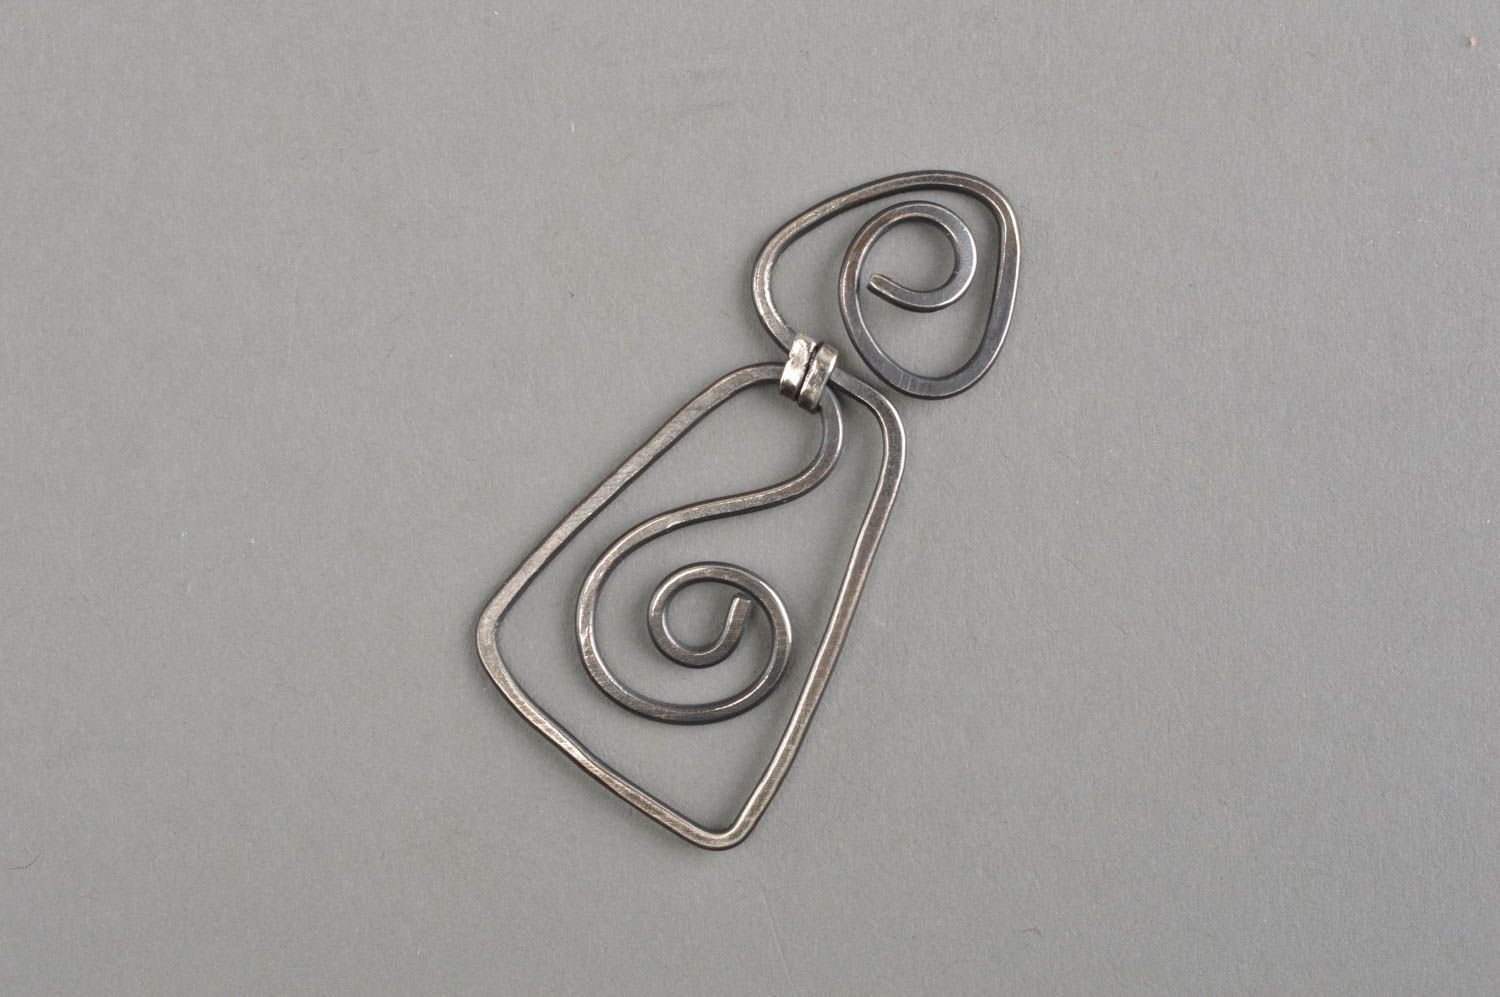 Handmade cute metal pendant stylish designer accessory forged jewelry photo 2